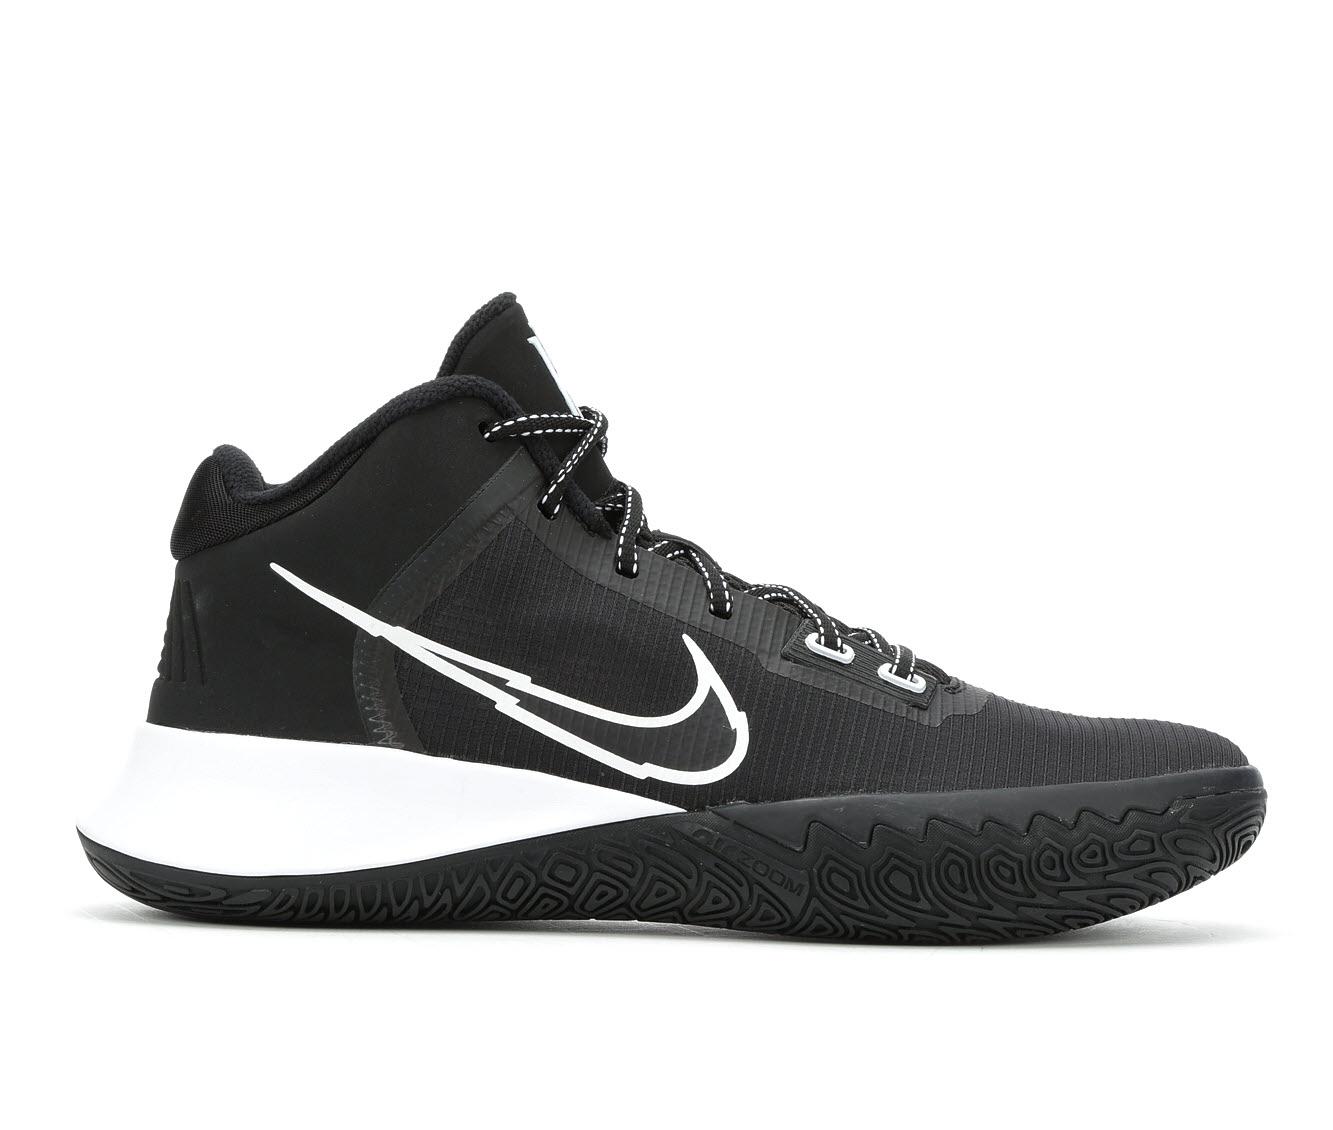 Nike Kyrie Flytrap Iv Athletic Shoe in Black for Men - Lyst